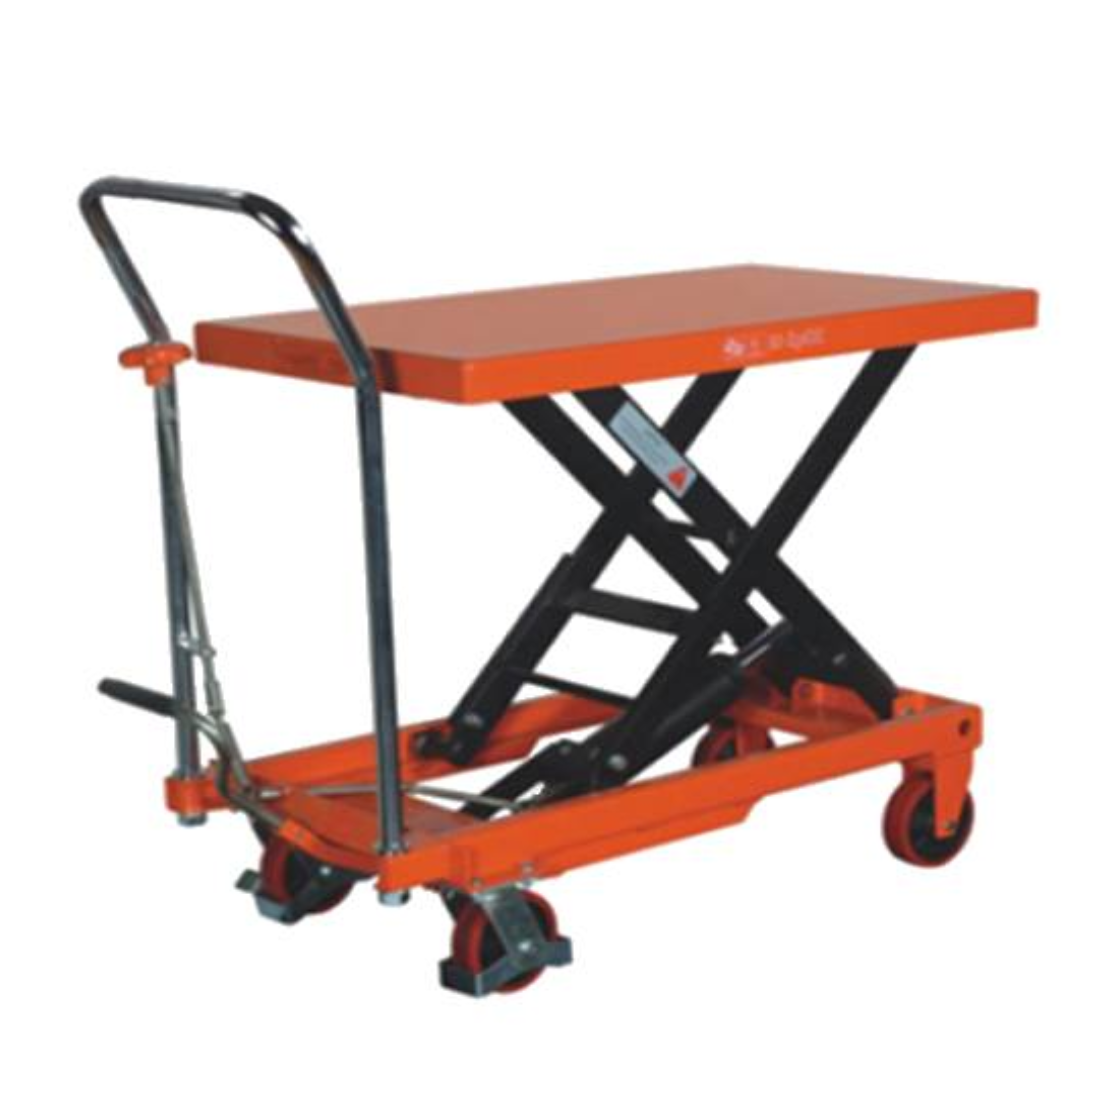 Stocky Hydraulic Lifting Trolley Table HLT500